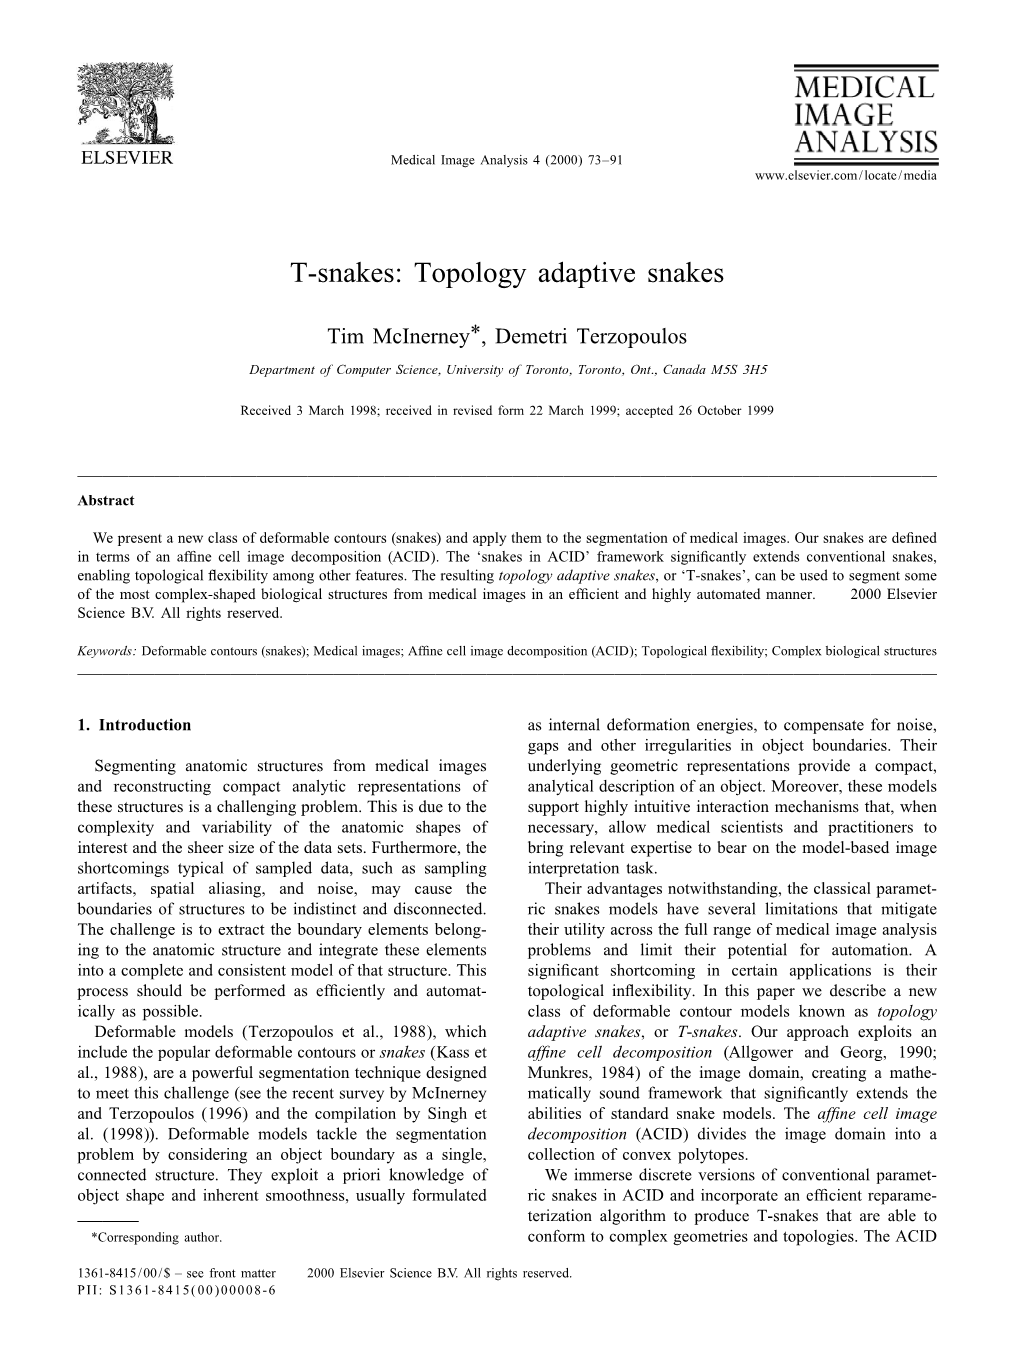 T-Snakes: Topology Adaptive Snakes